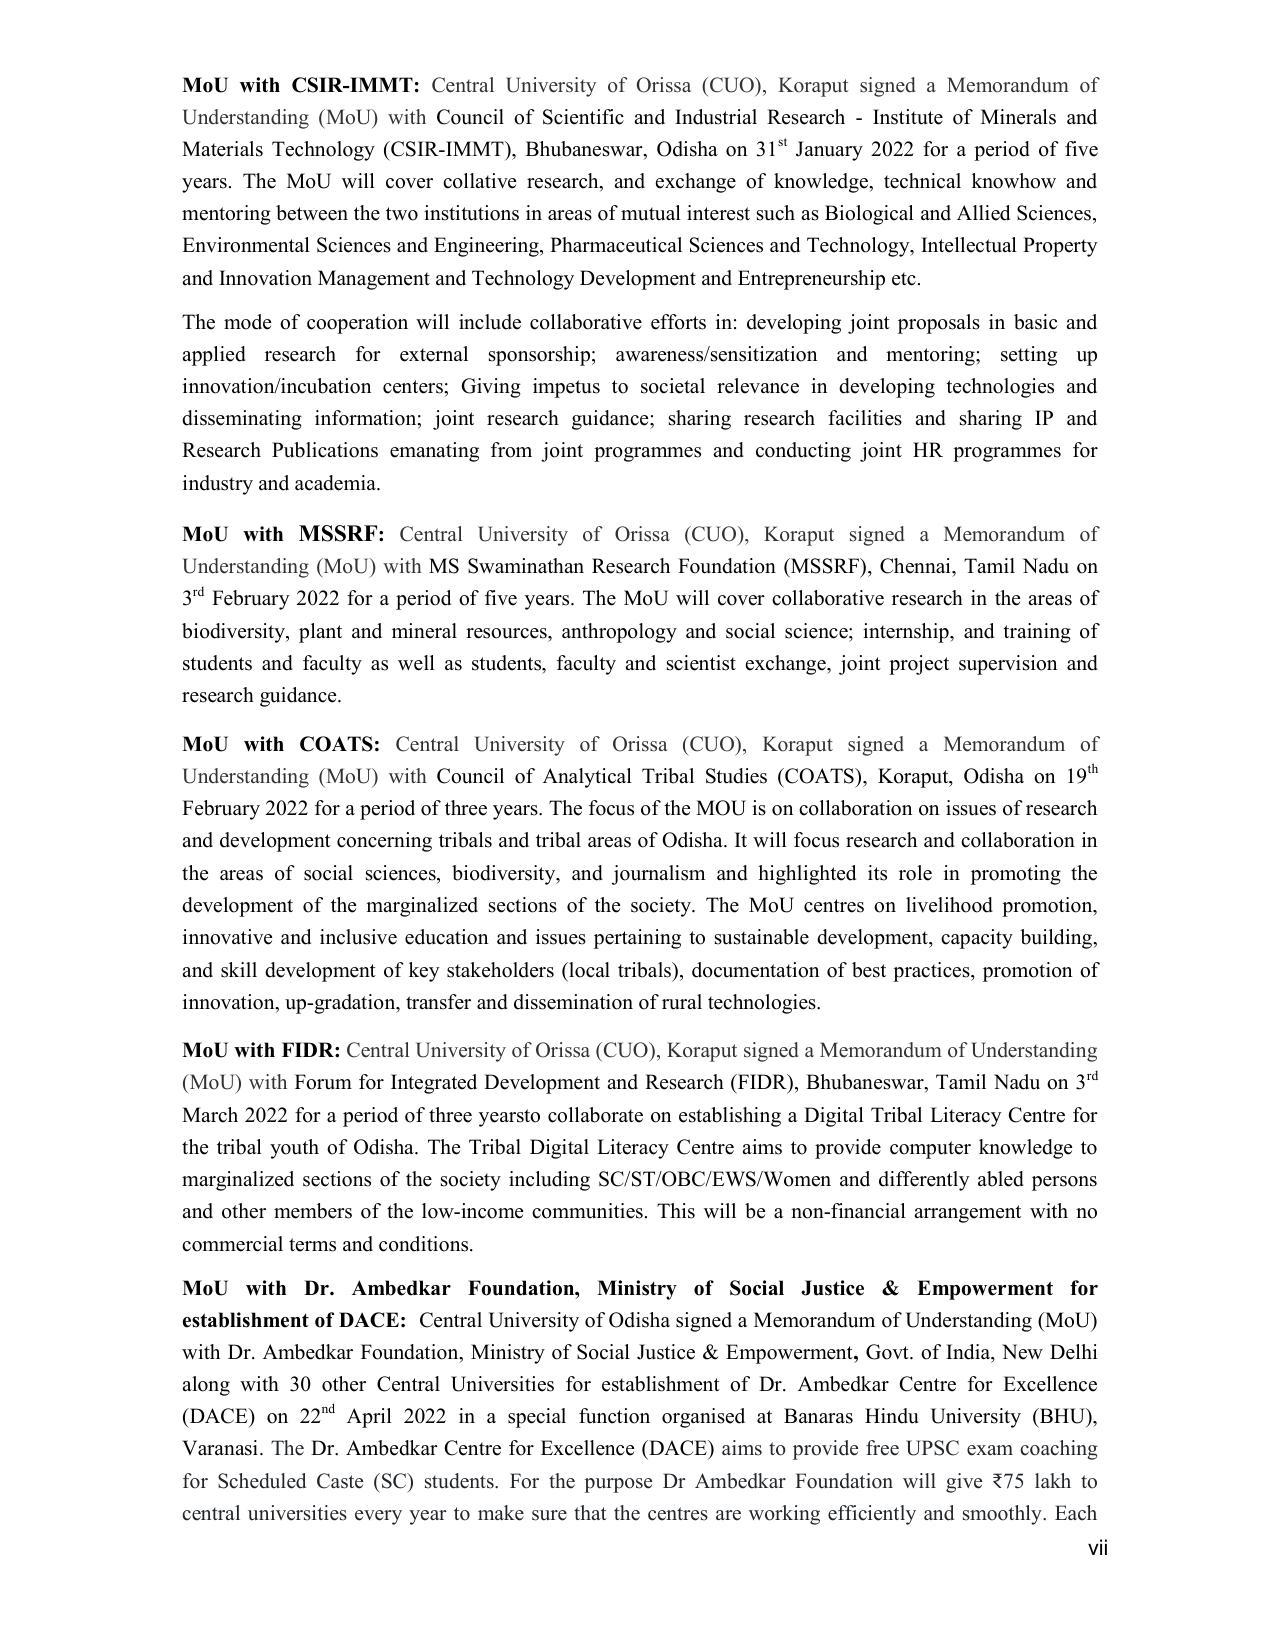 Central University of Odisha Prospectus - Page 8